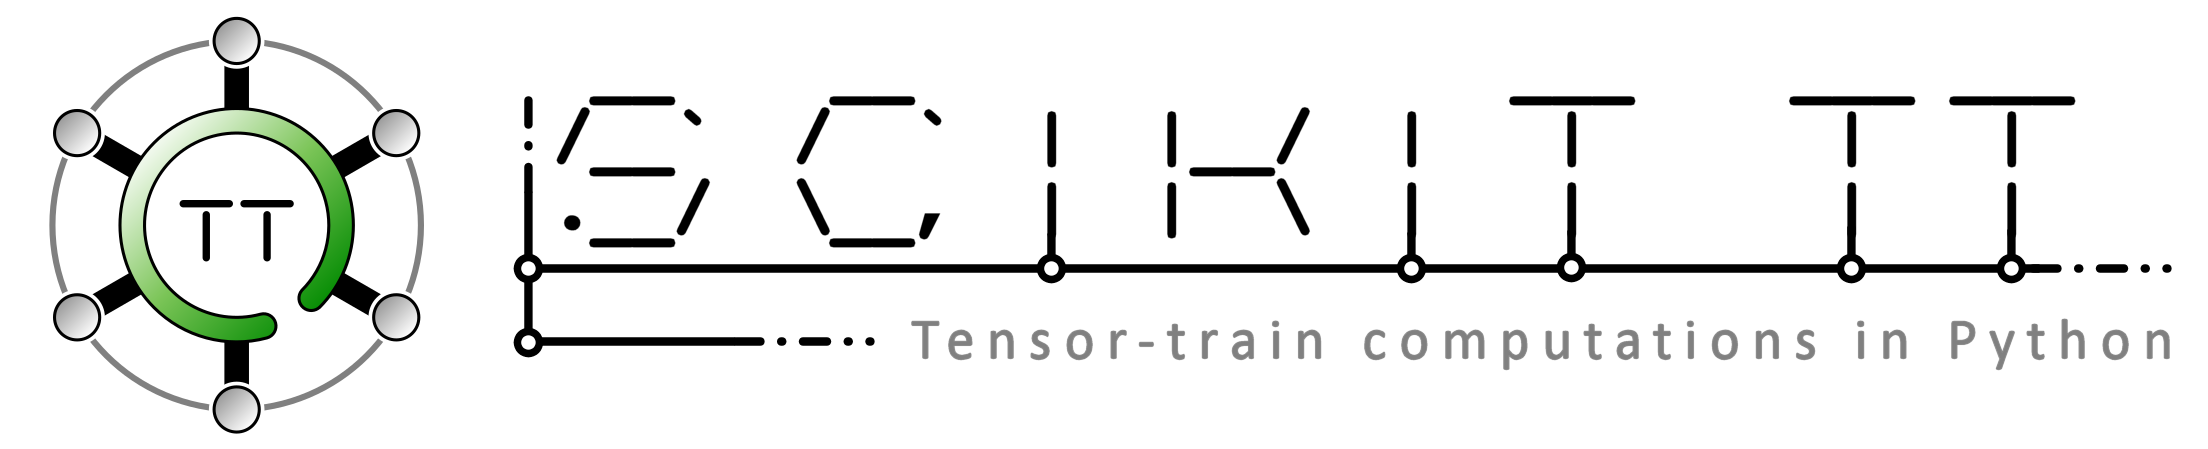 scikit-tt - A toolbox for tensor-train computations